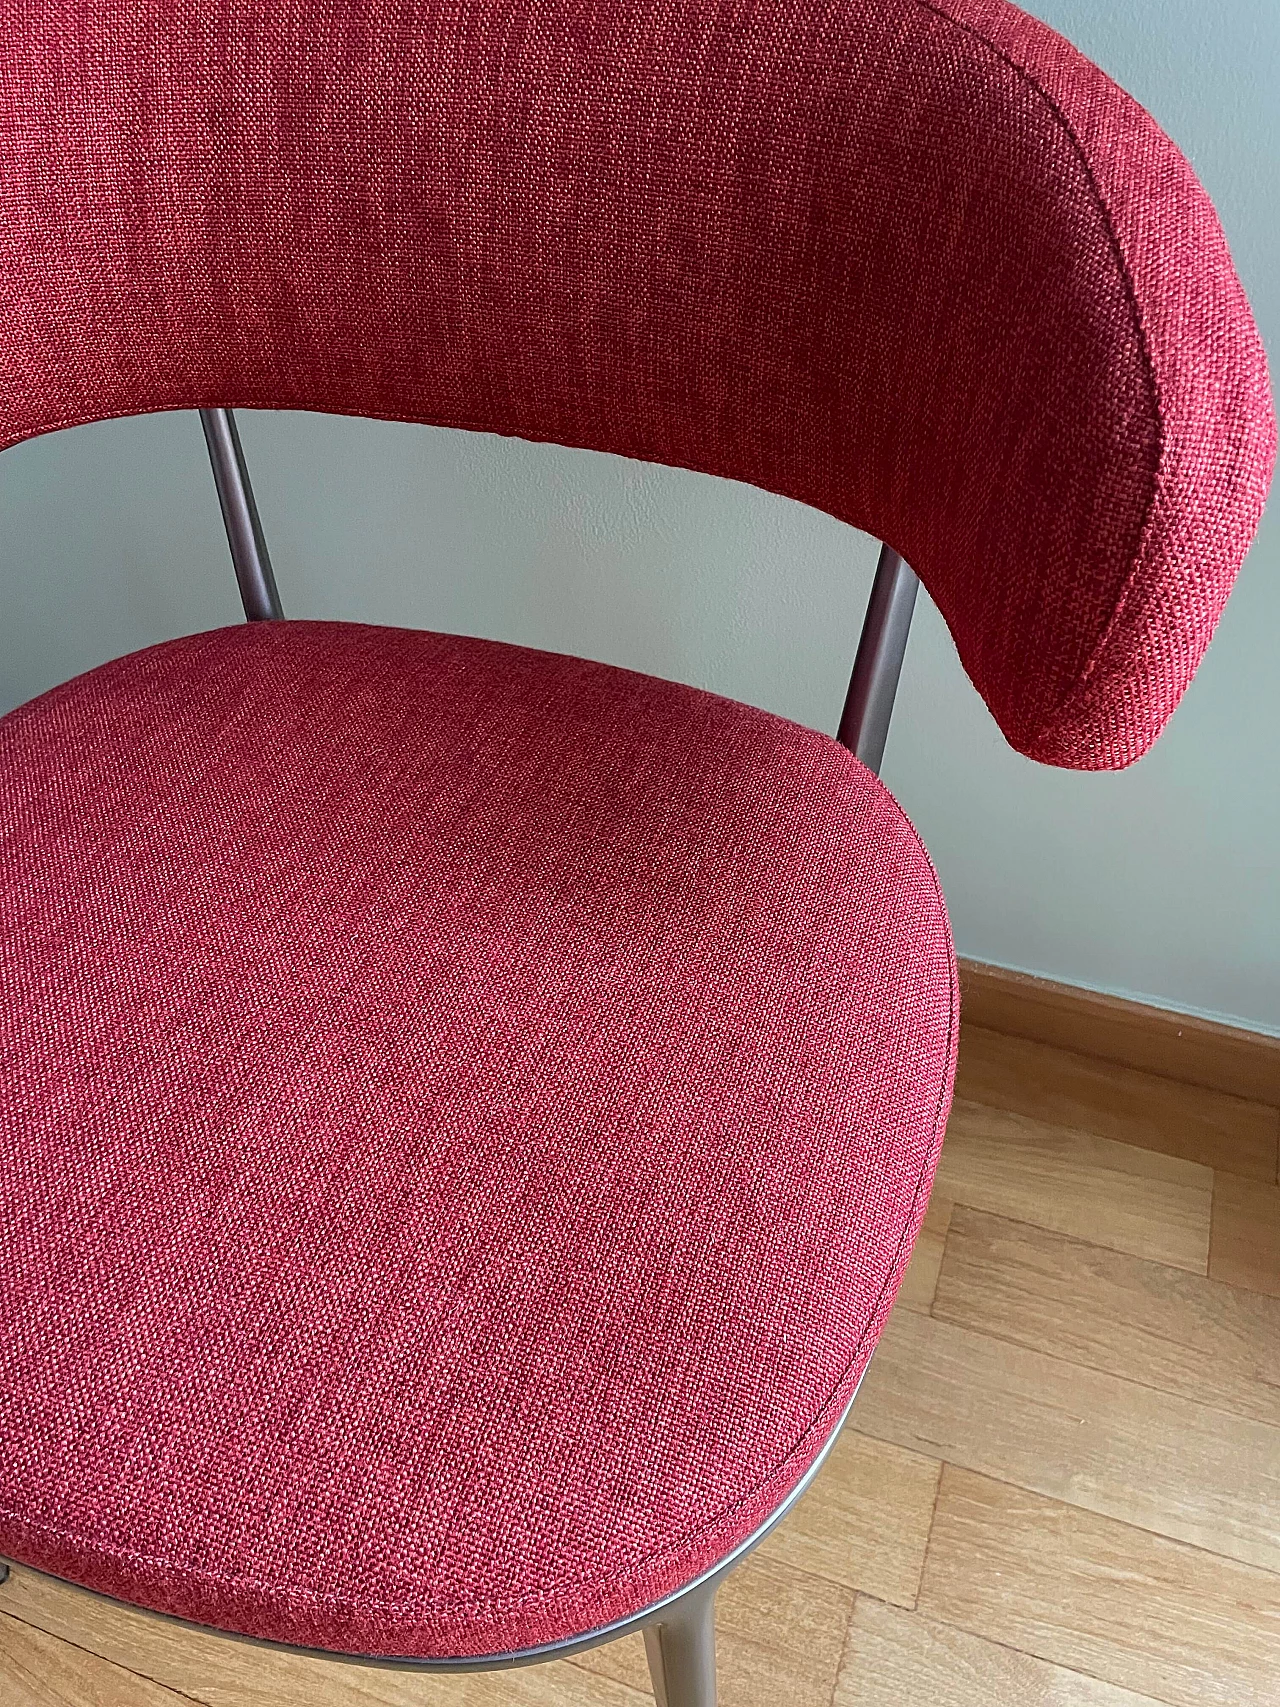 Caratos chair in aluminium and red fabric by Antonio Citterio for Maxalto, 2000s 2